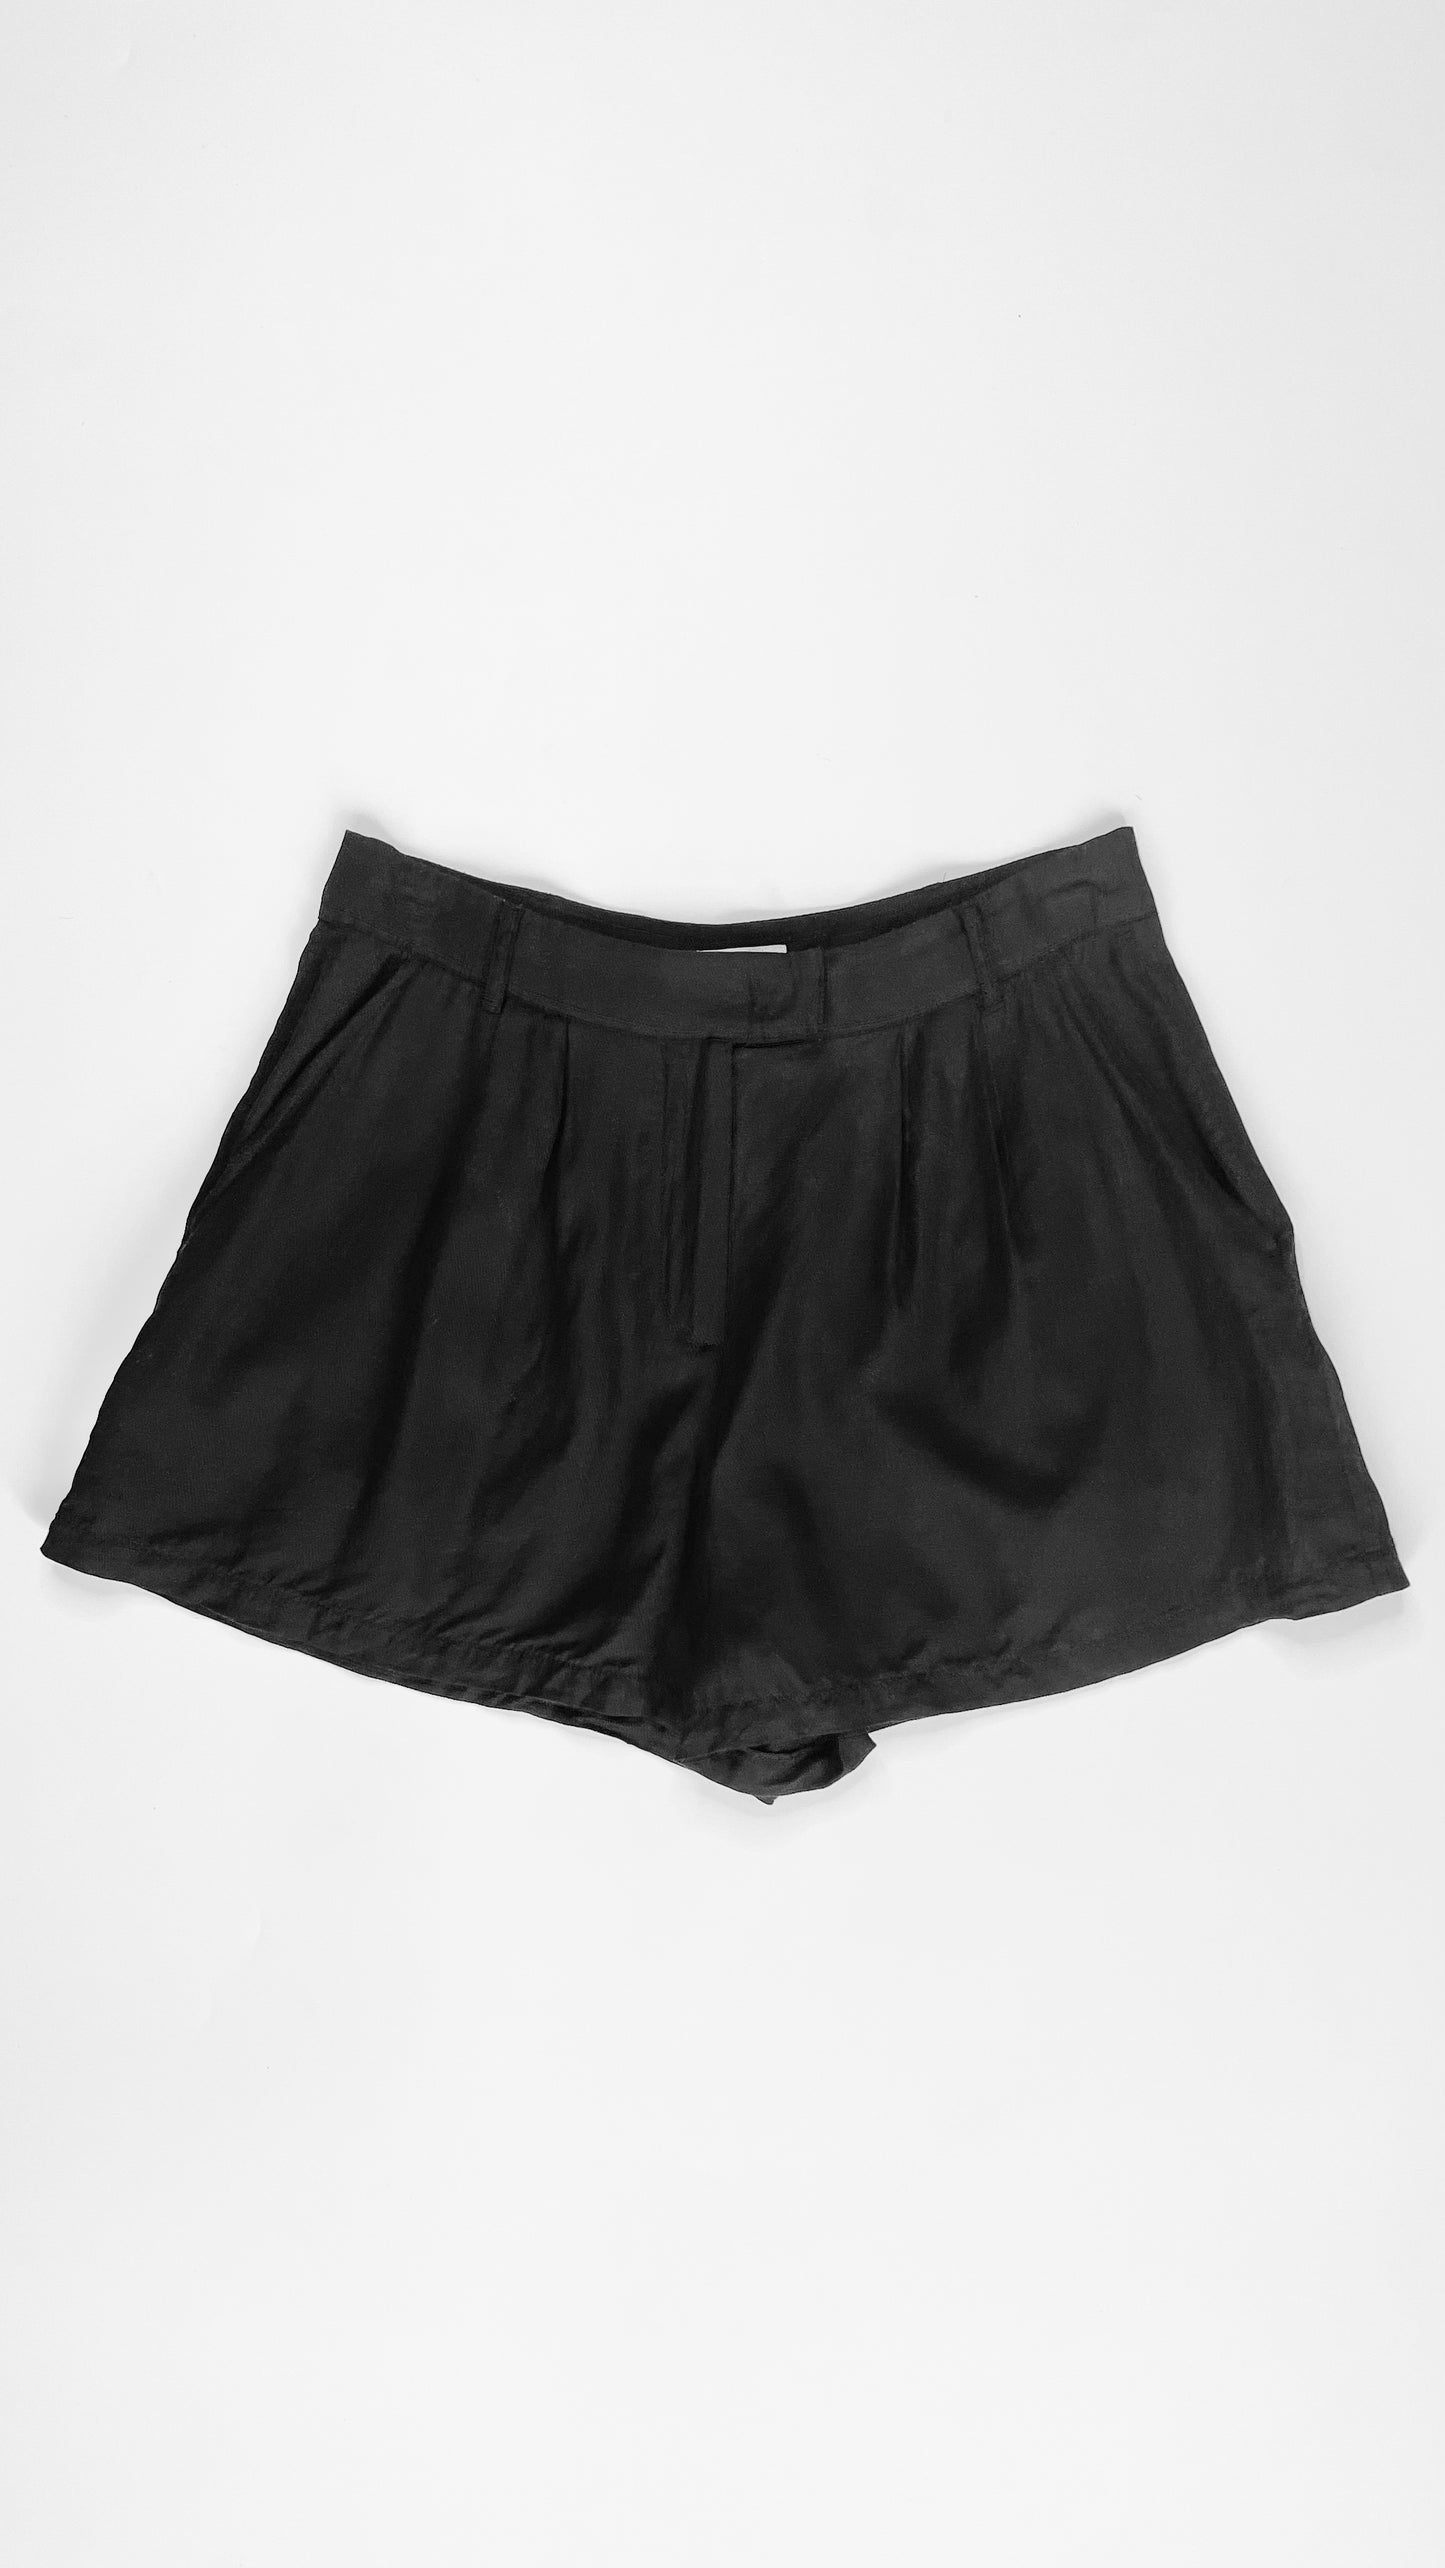 Vintage 90s United Colors of Benetton black shorts - Size 4